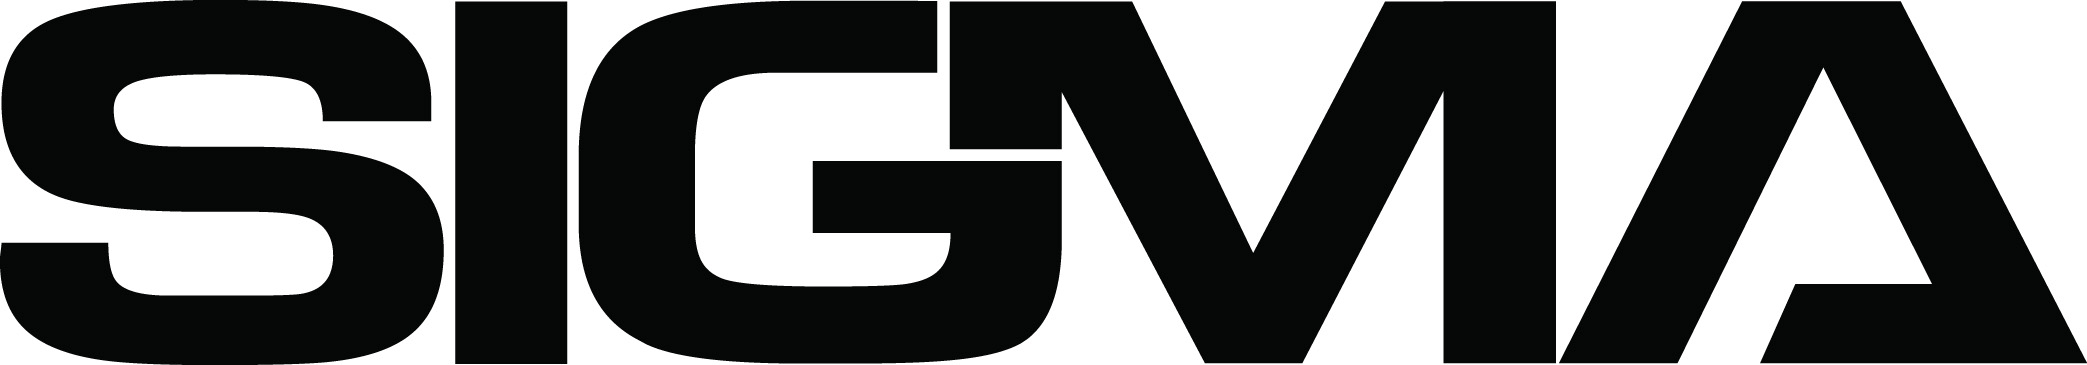 Аратин сигма. Sigma logo. Sigma надпись. Sigma бренд логотип. Модельное агентство Сигма лого.